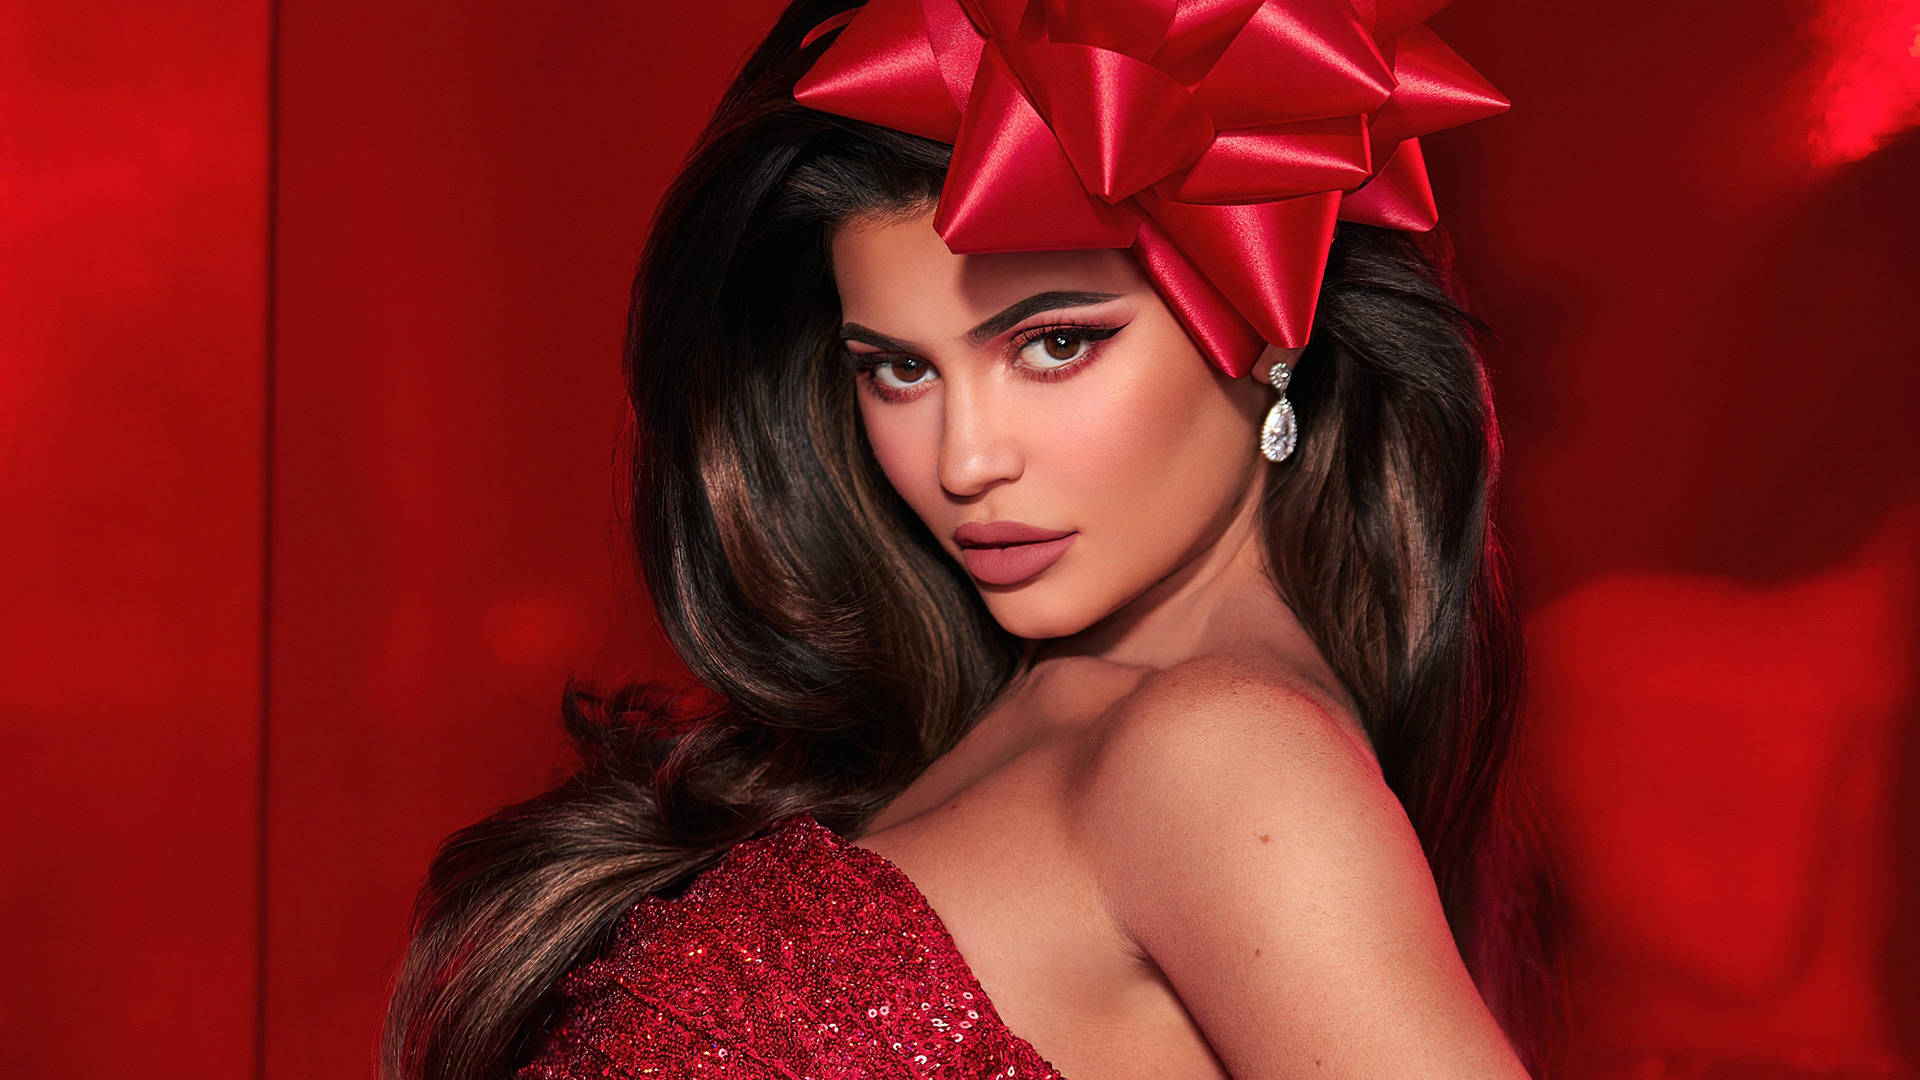 Kylie Jenner In Red Dress Wallpaper